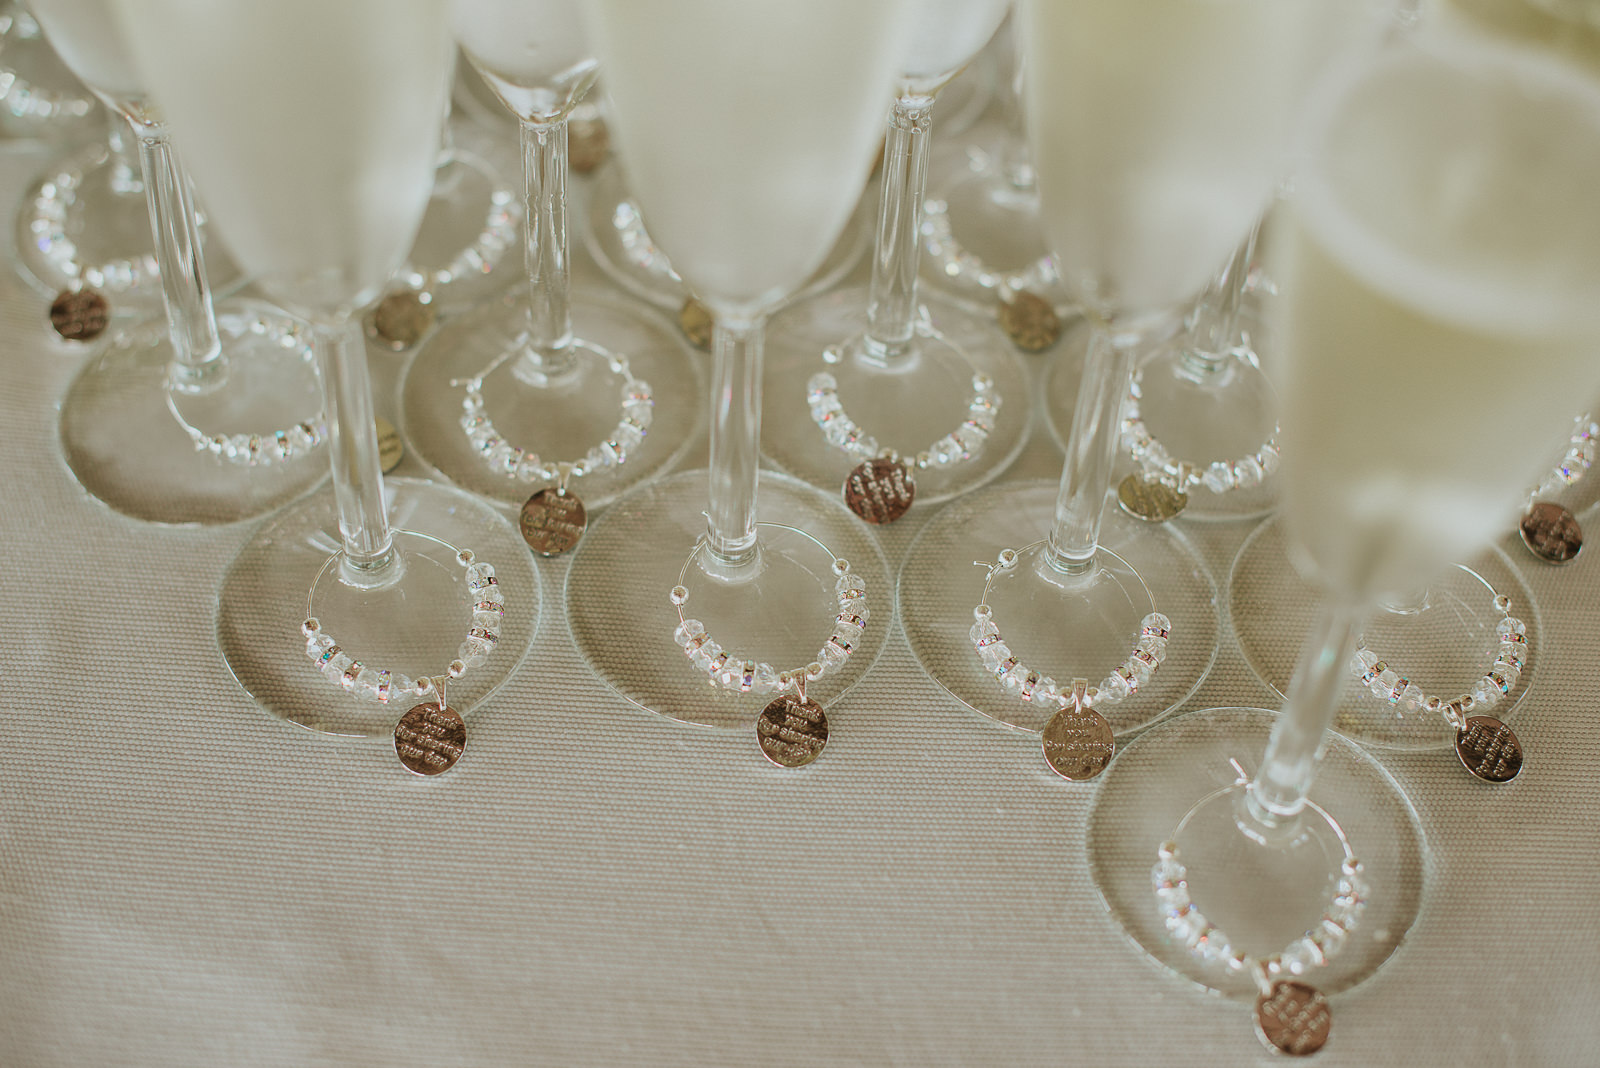 decoration for prosecco champagne glasses wedding